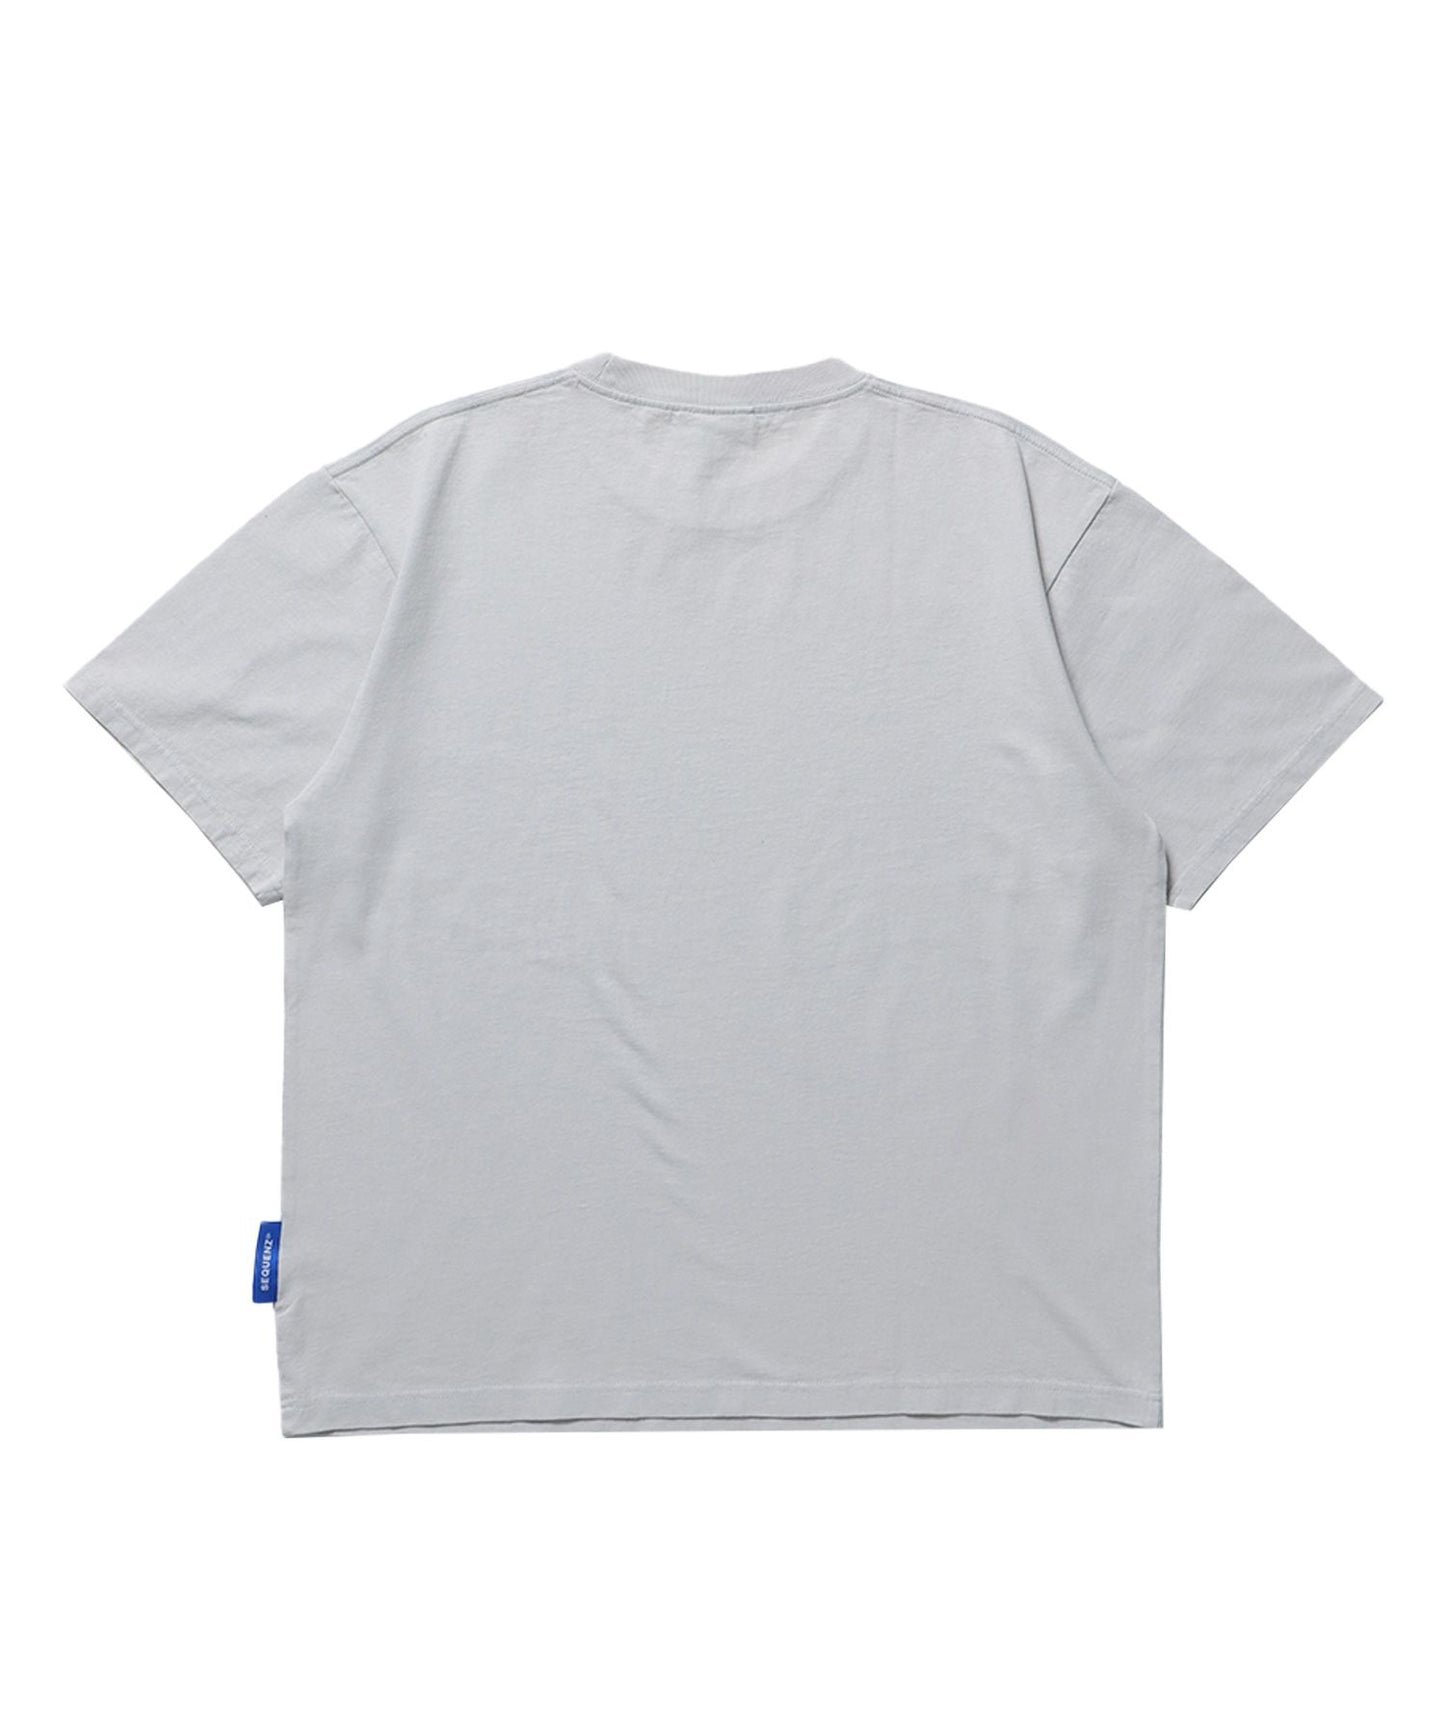 NVL EX COOLAGE SST / 半袖Tシャツ クルーネック ブランドロゴ ハードバイオ ダイス フラワー ライトグレー